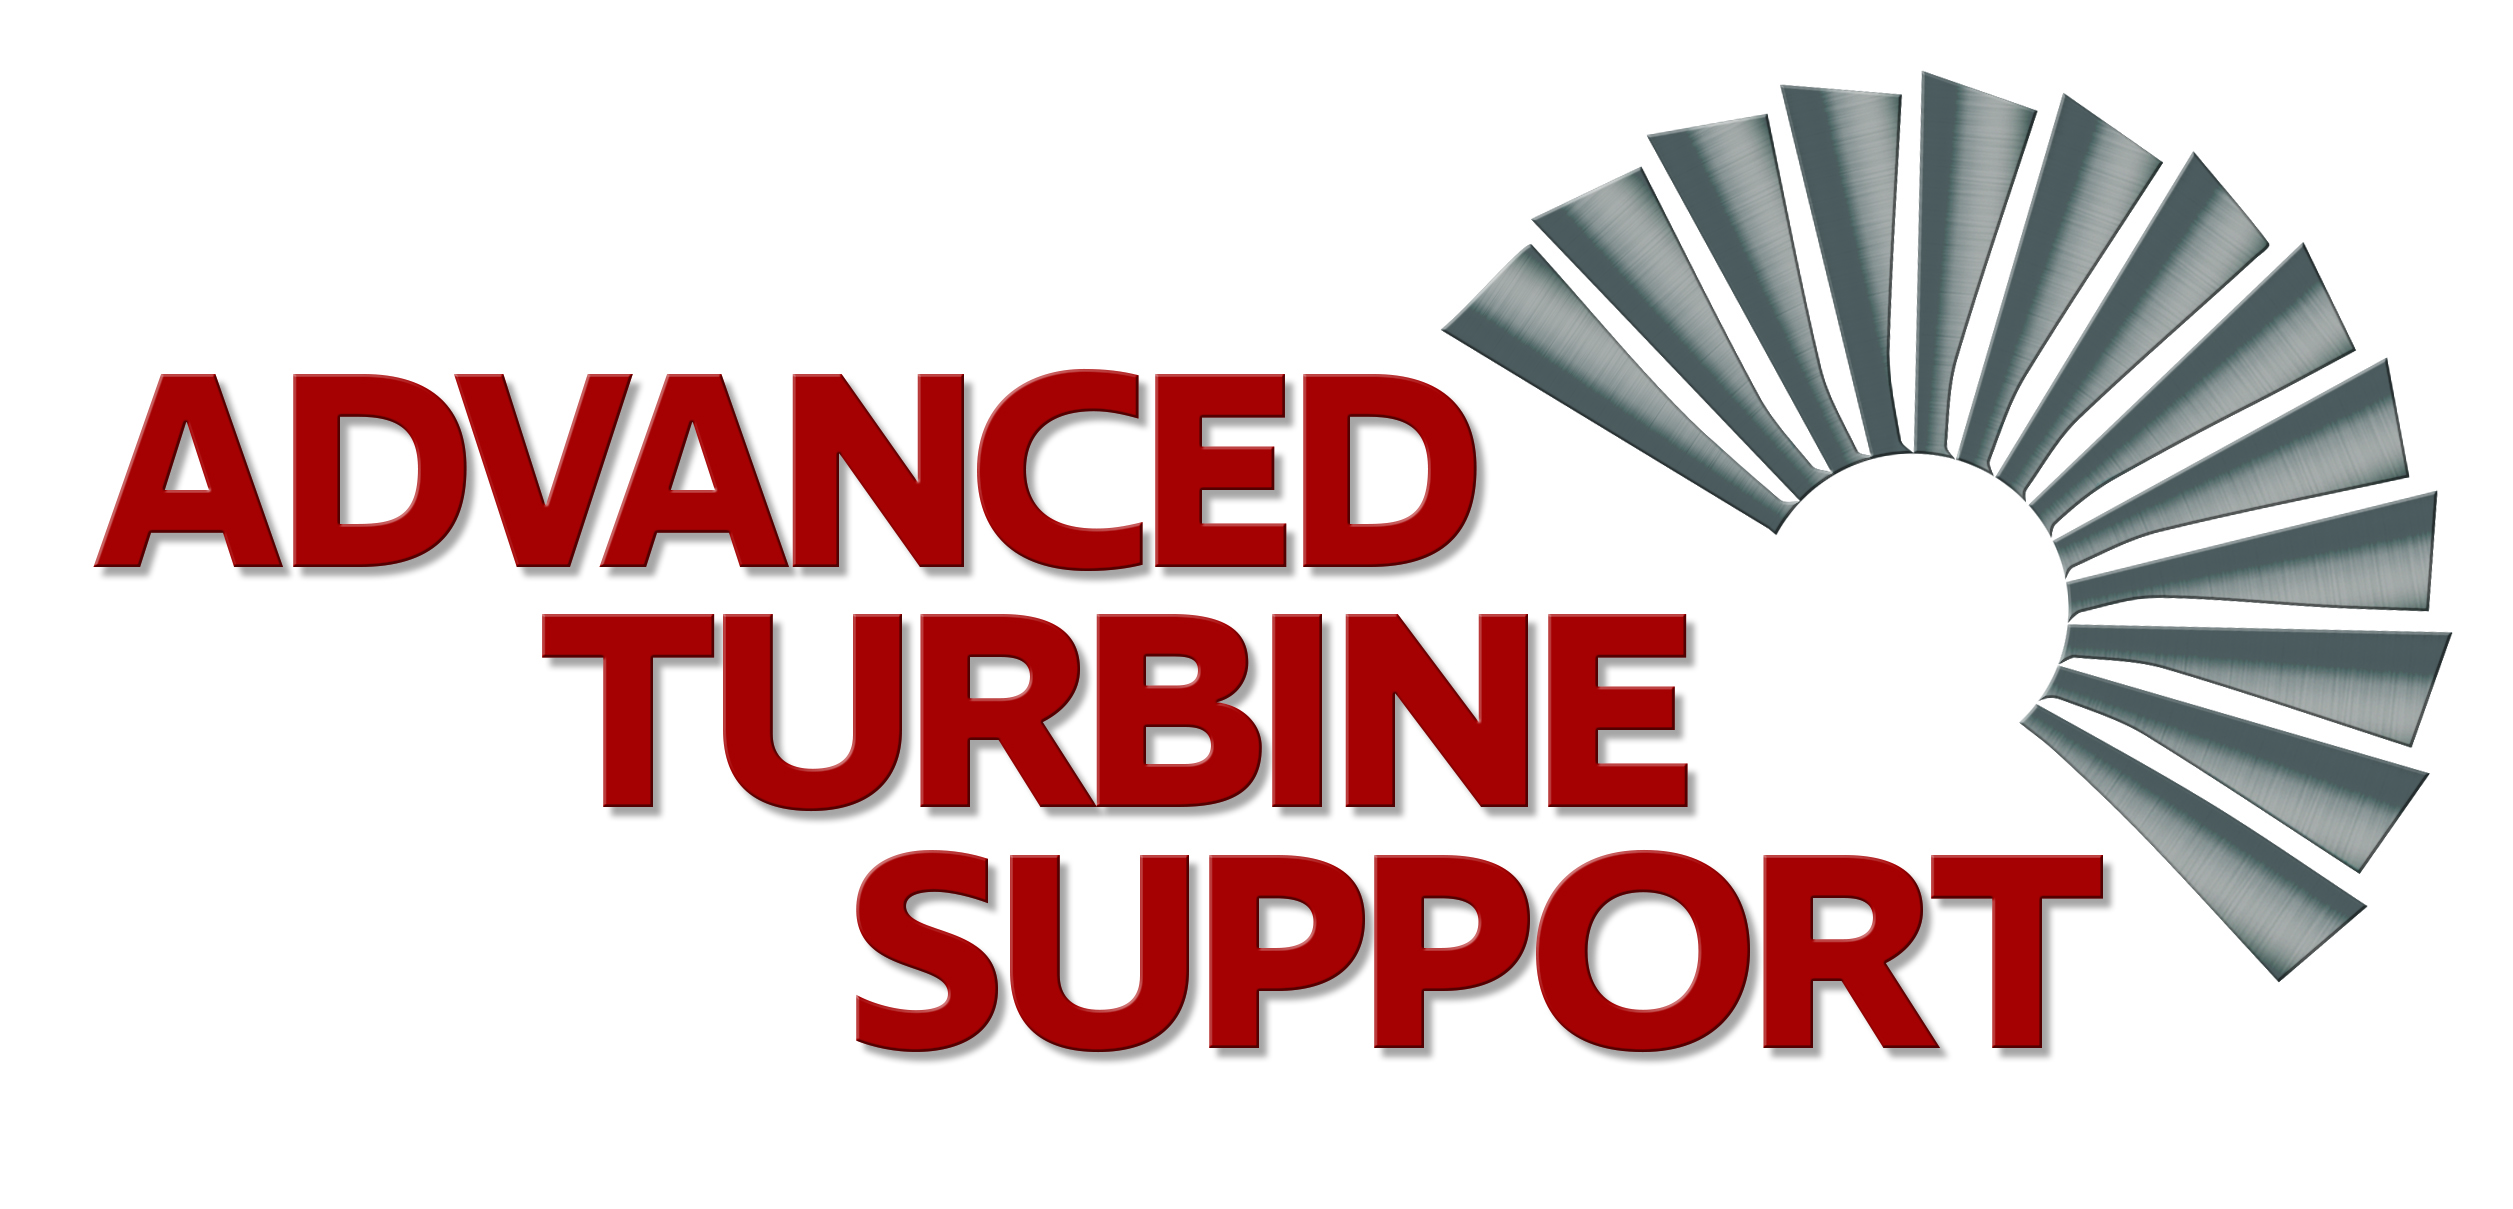 Advanced Turbine Support logo 2018